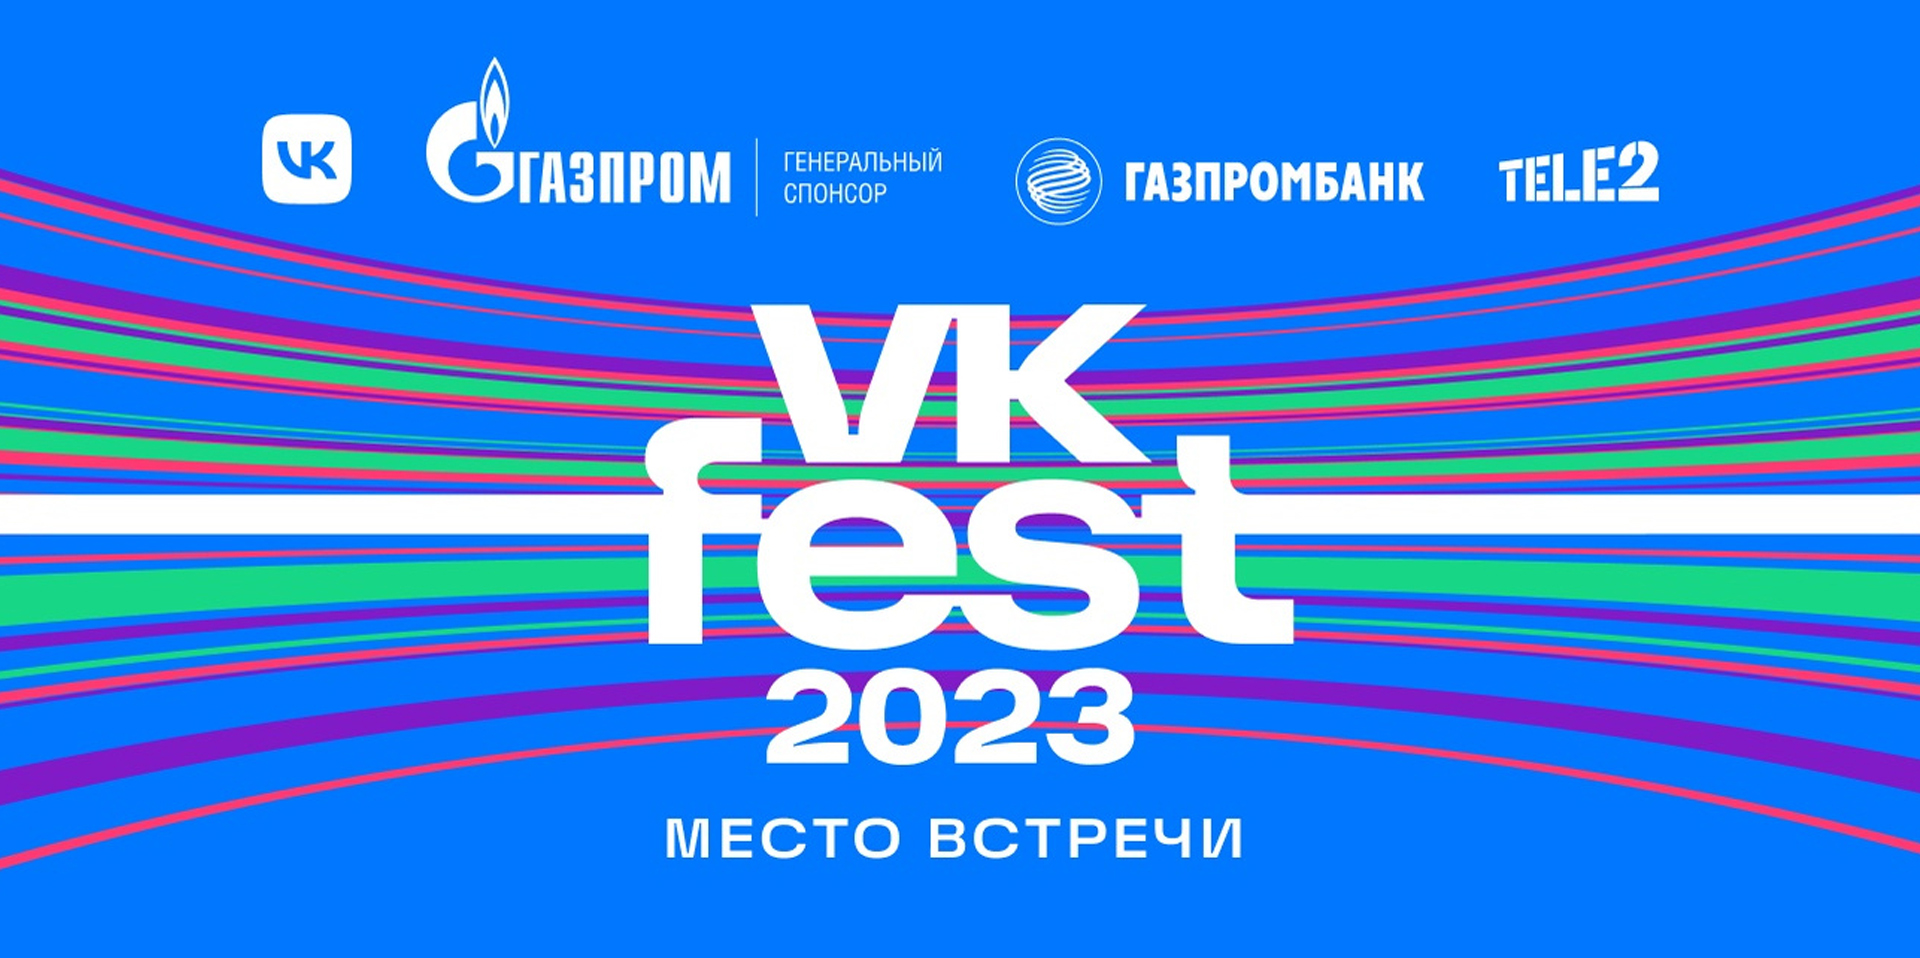 VK Fest 2023 - фестиваль уже скоро!